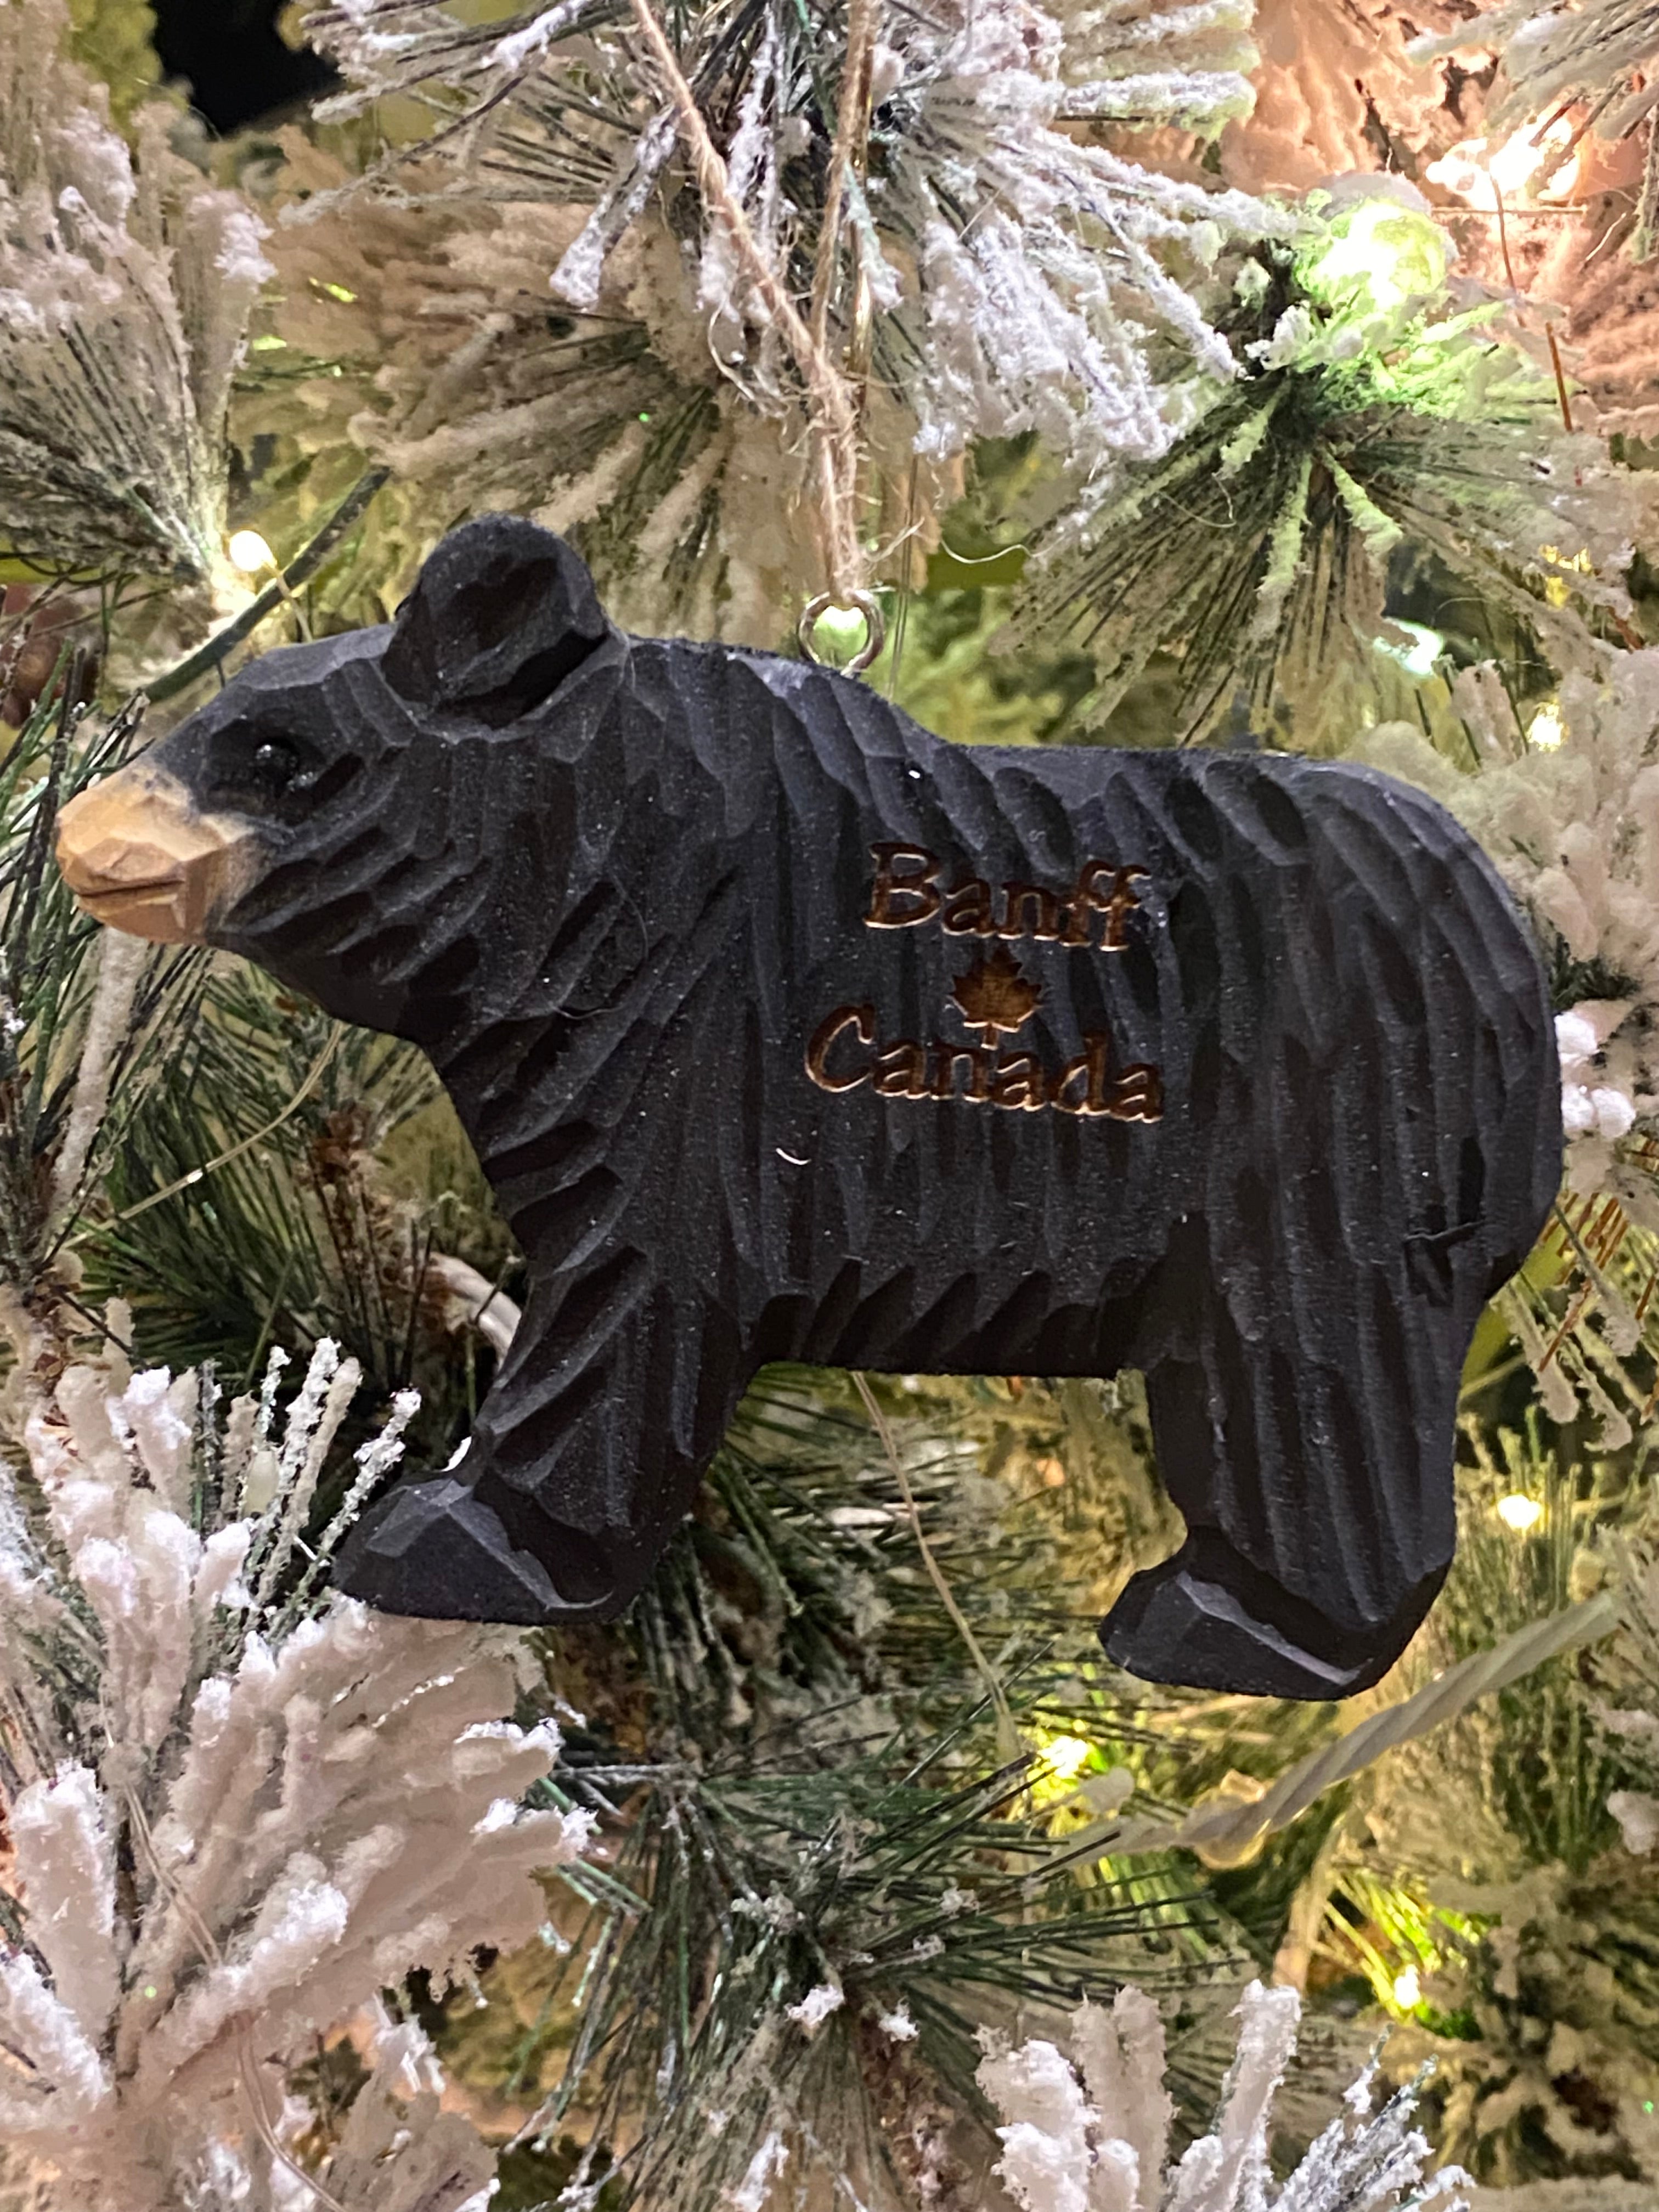 Bear Banff Ornament